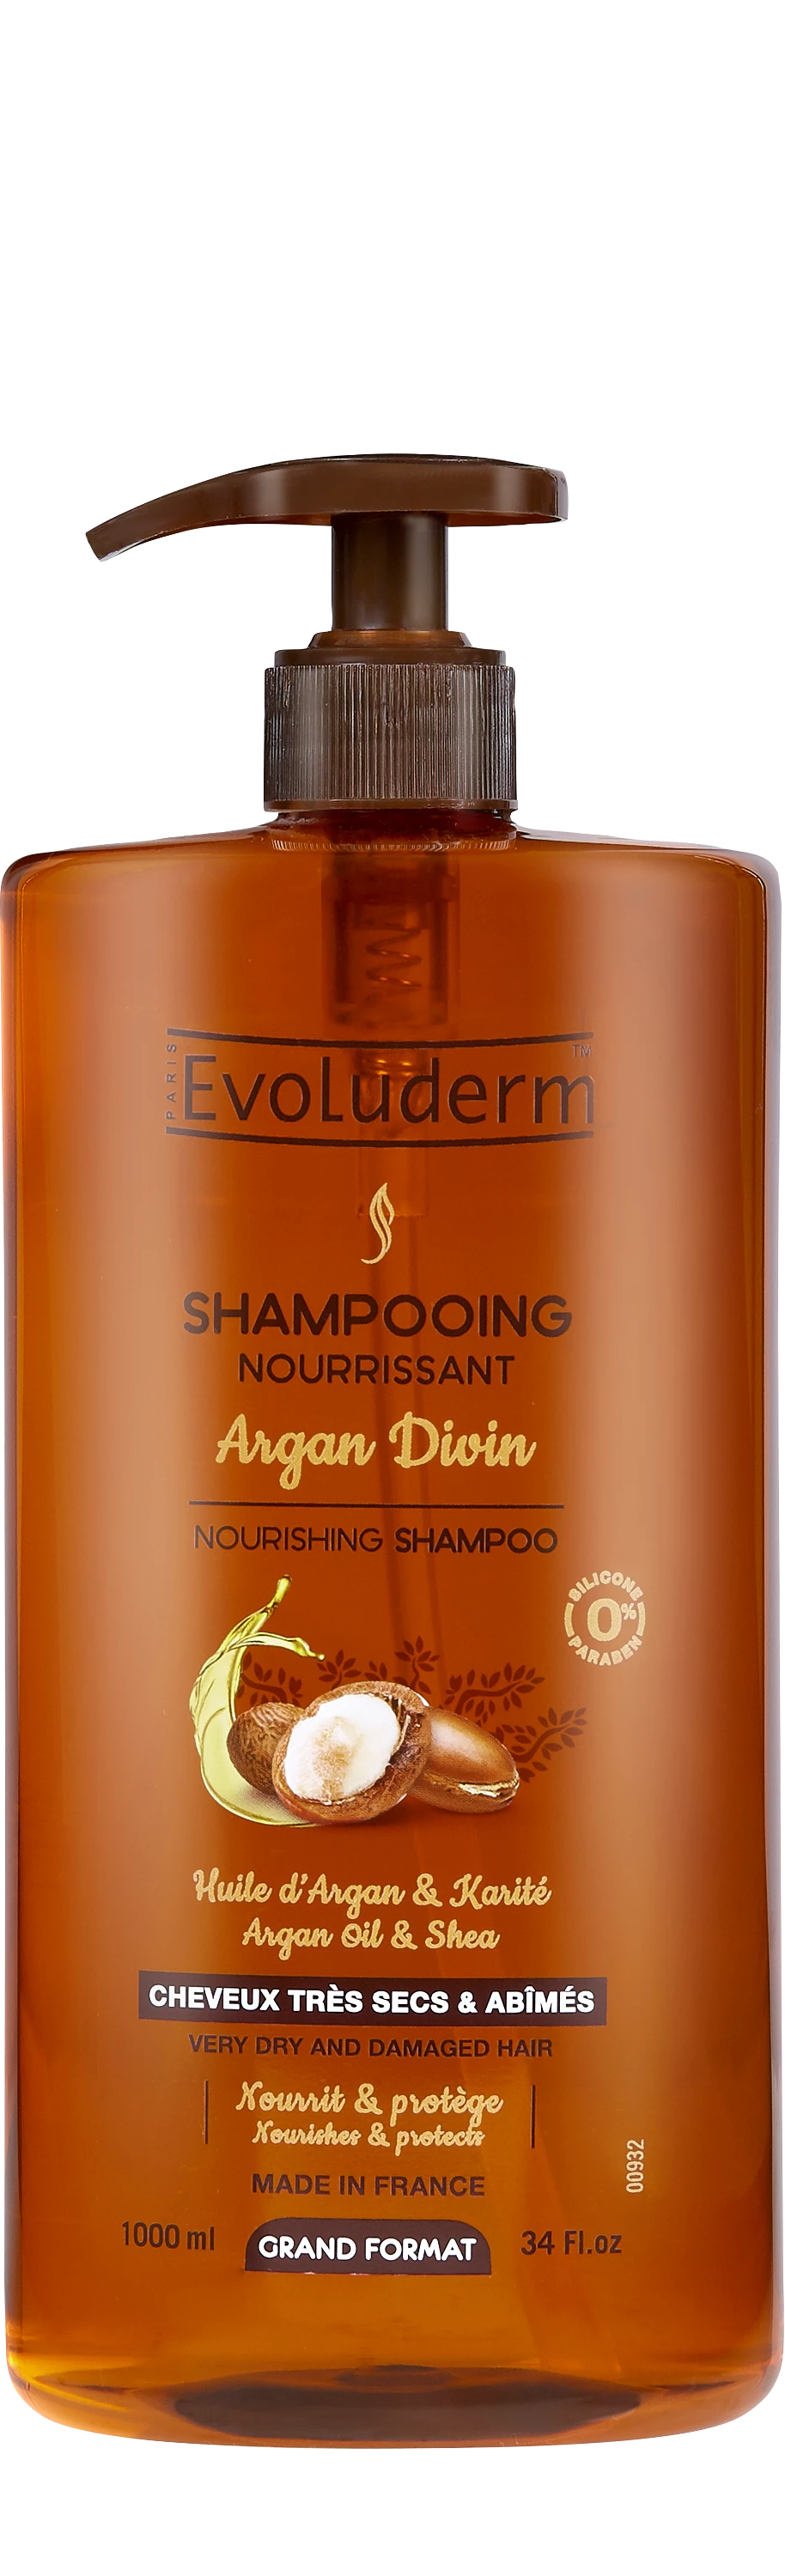 Divine Argan Voedende Shampoo, 1L - EVOLUDERM